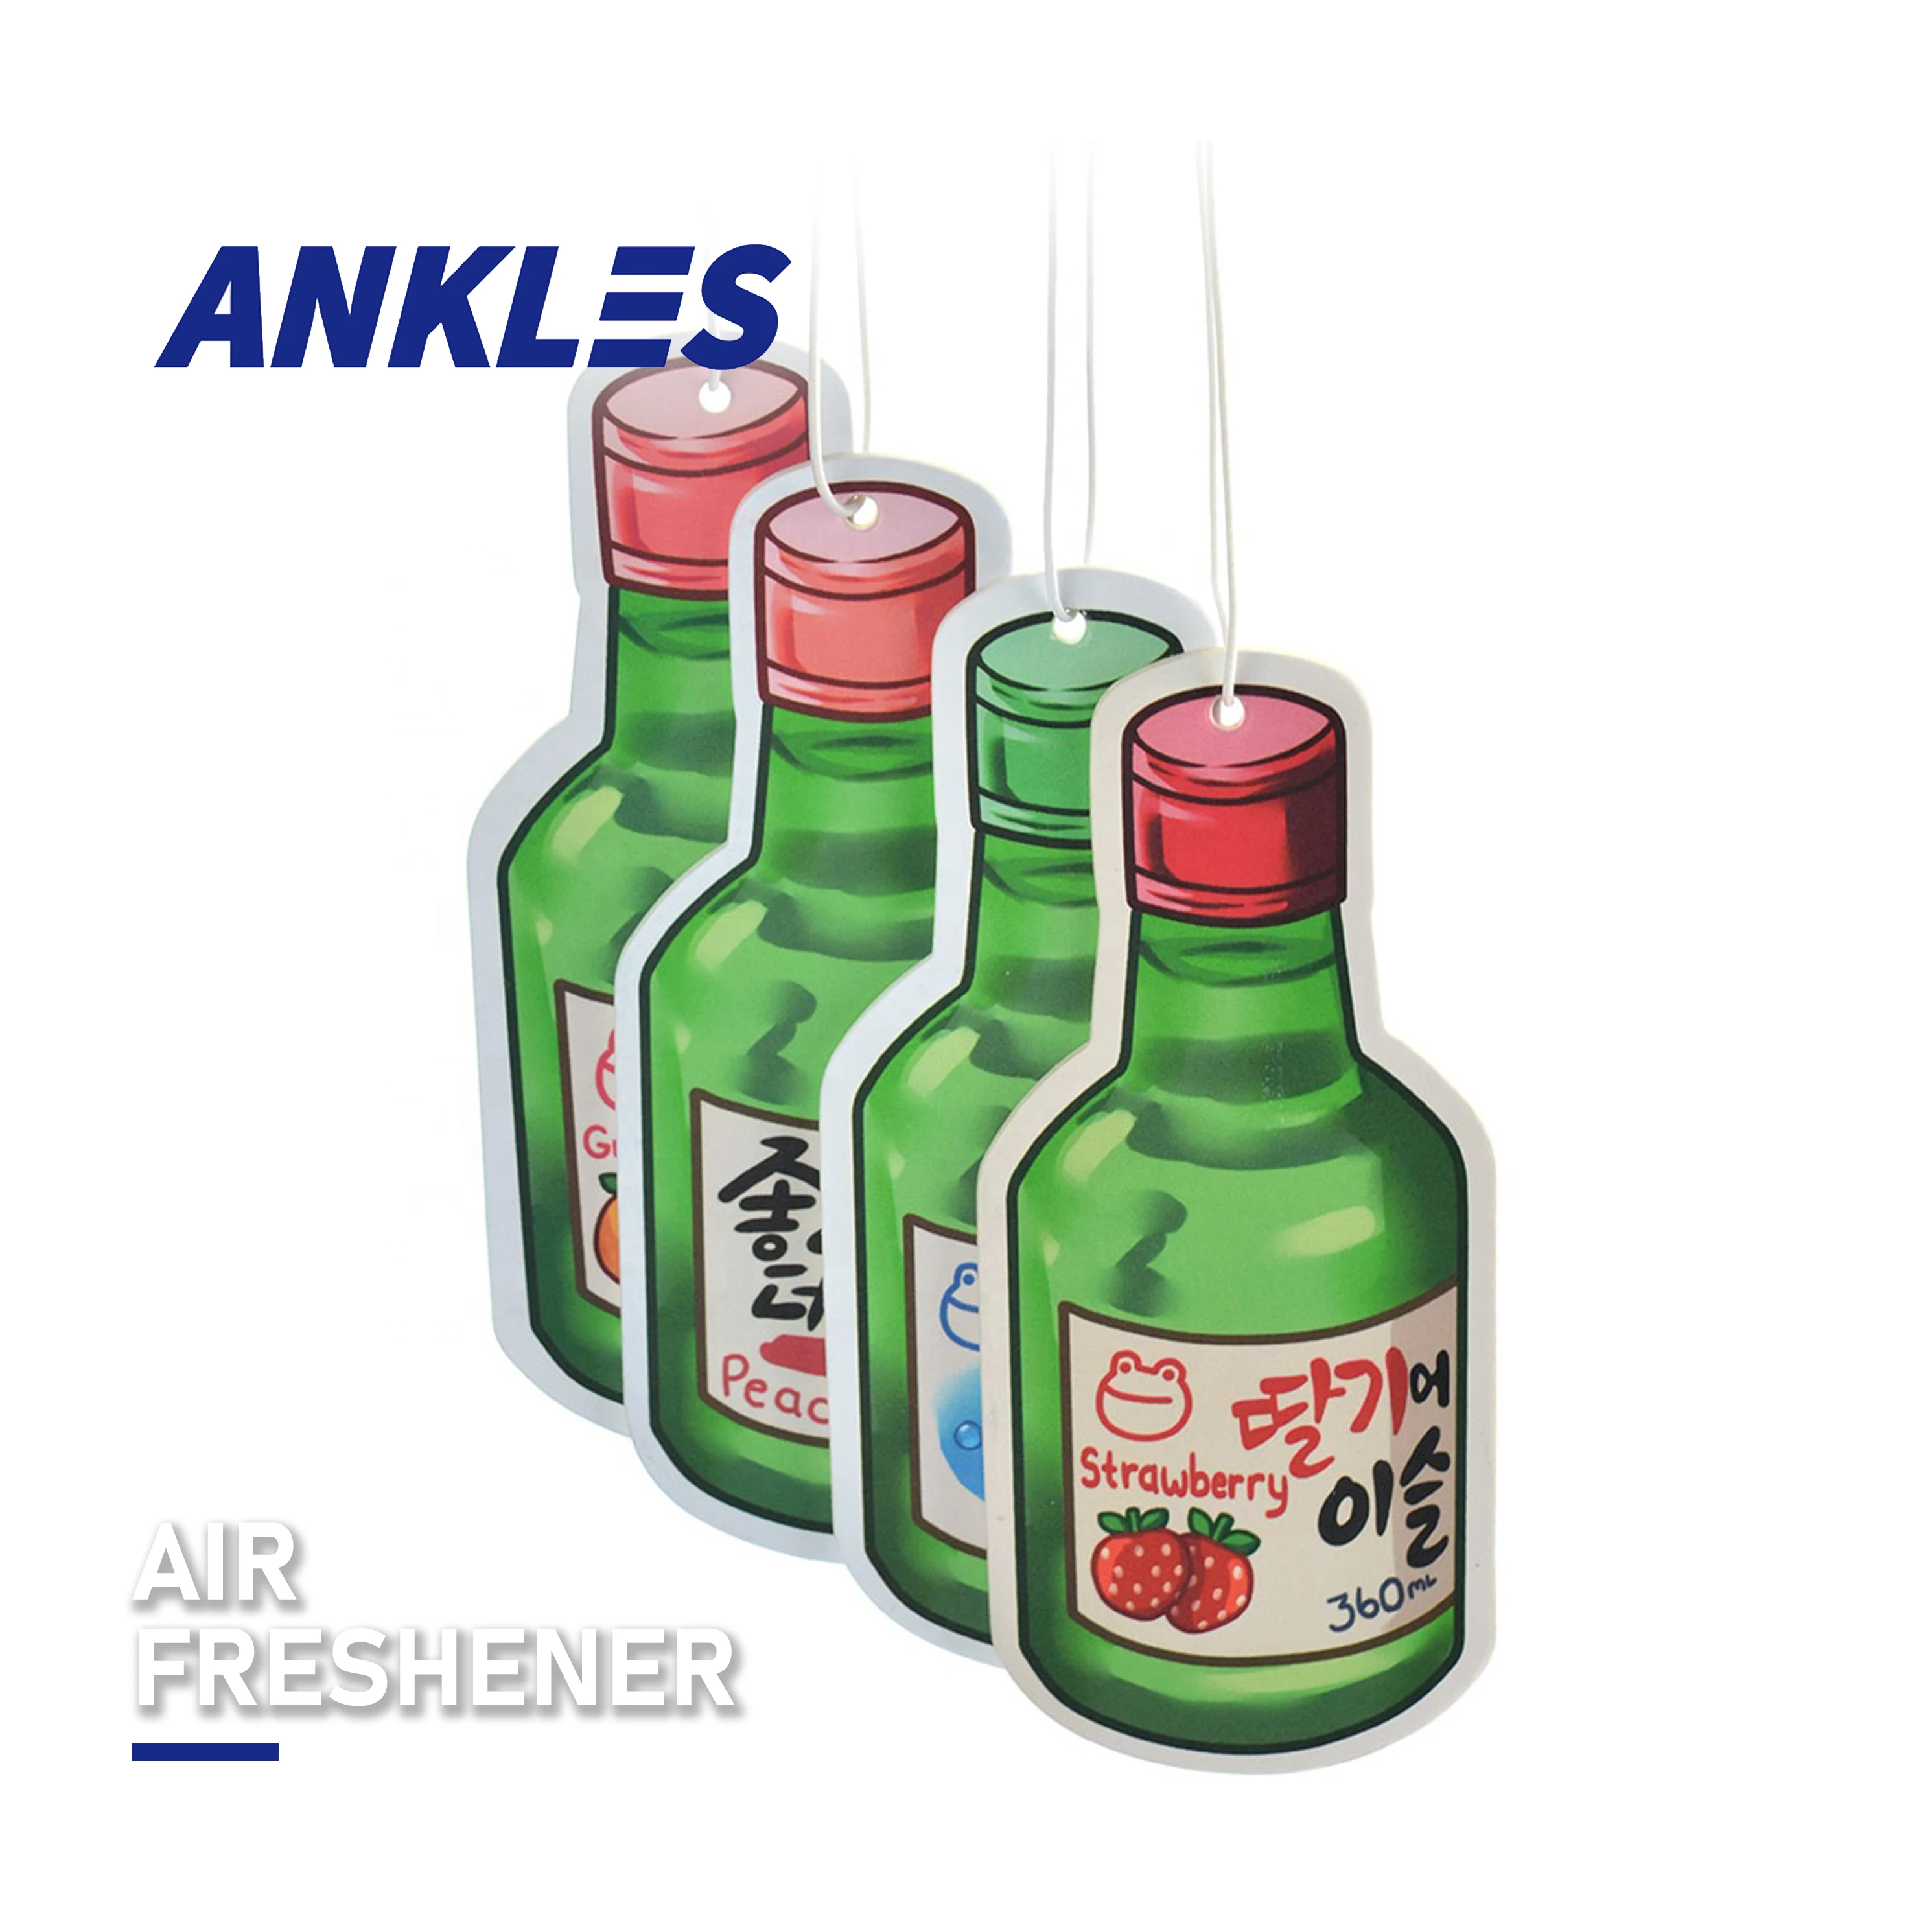 ANKLES wholesale car air freshener rap record scents deodorant custom logo car air freshener